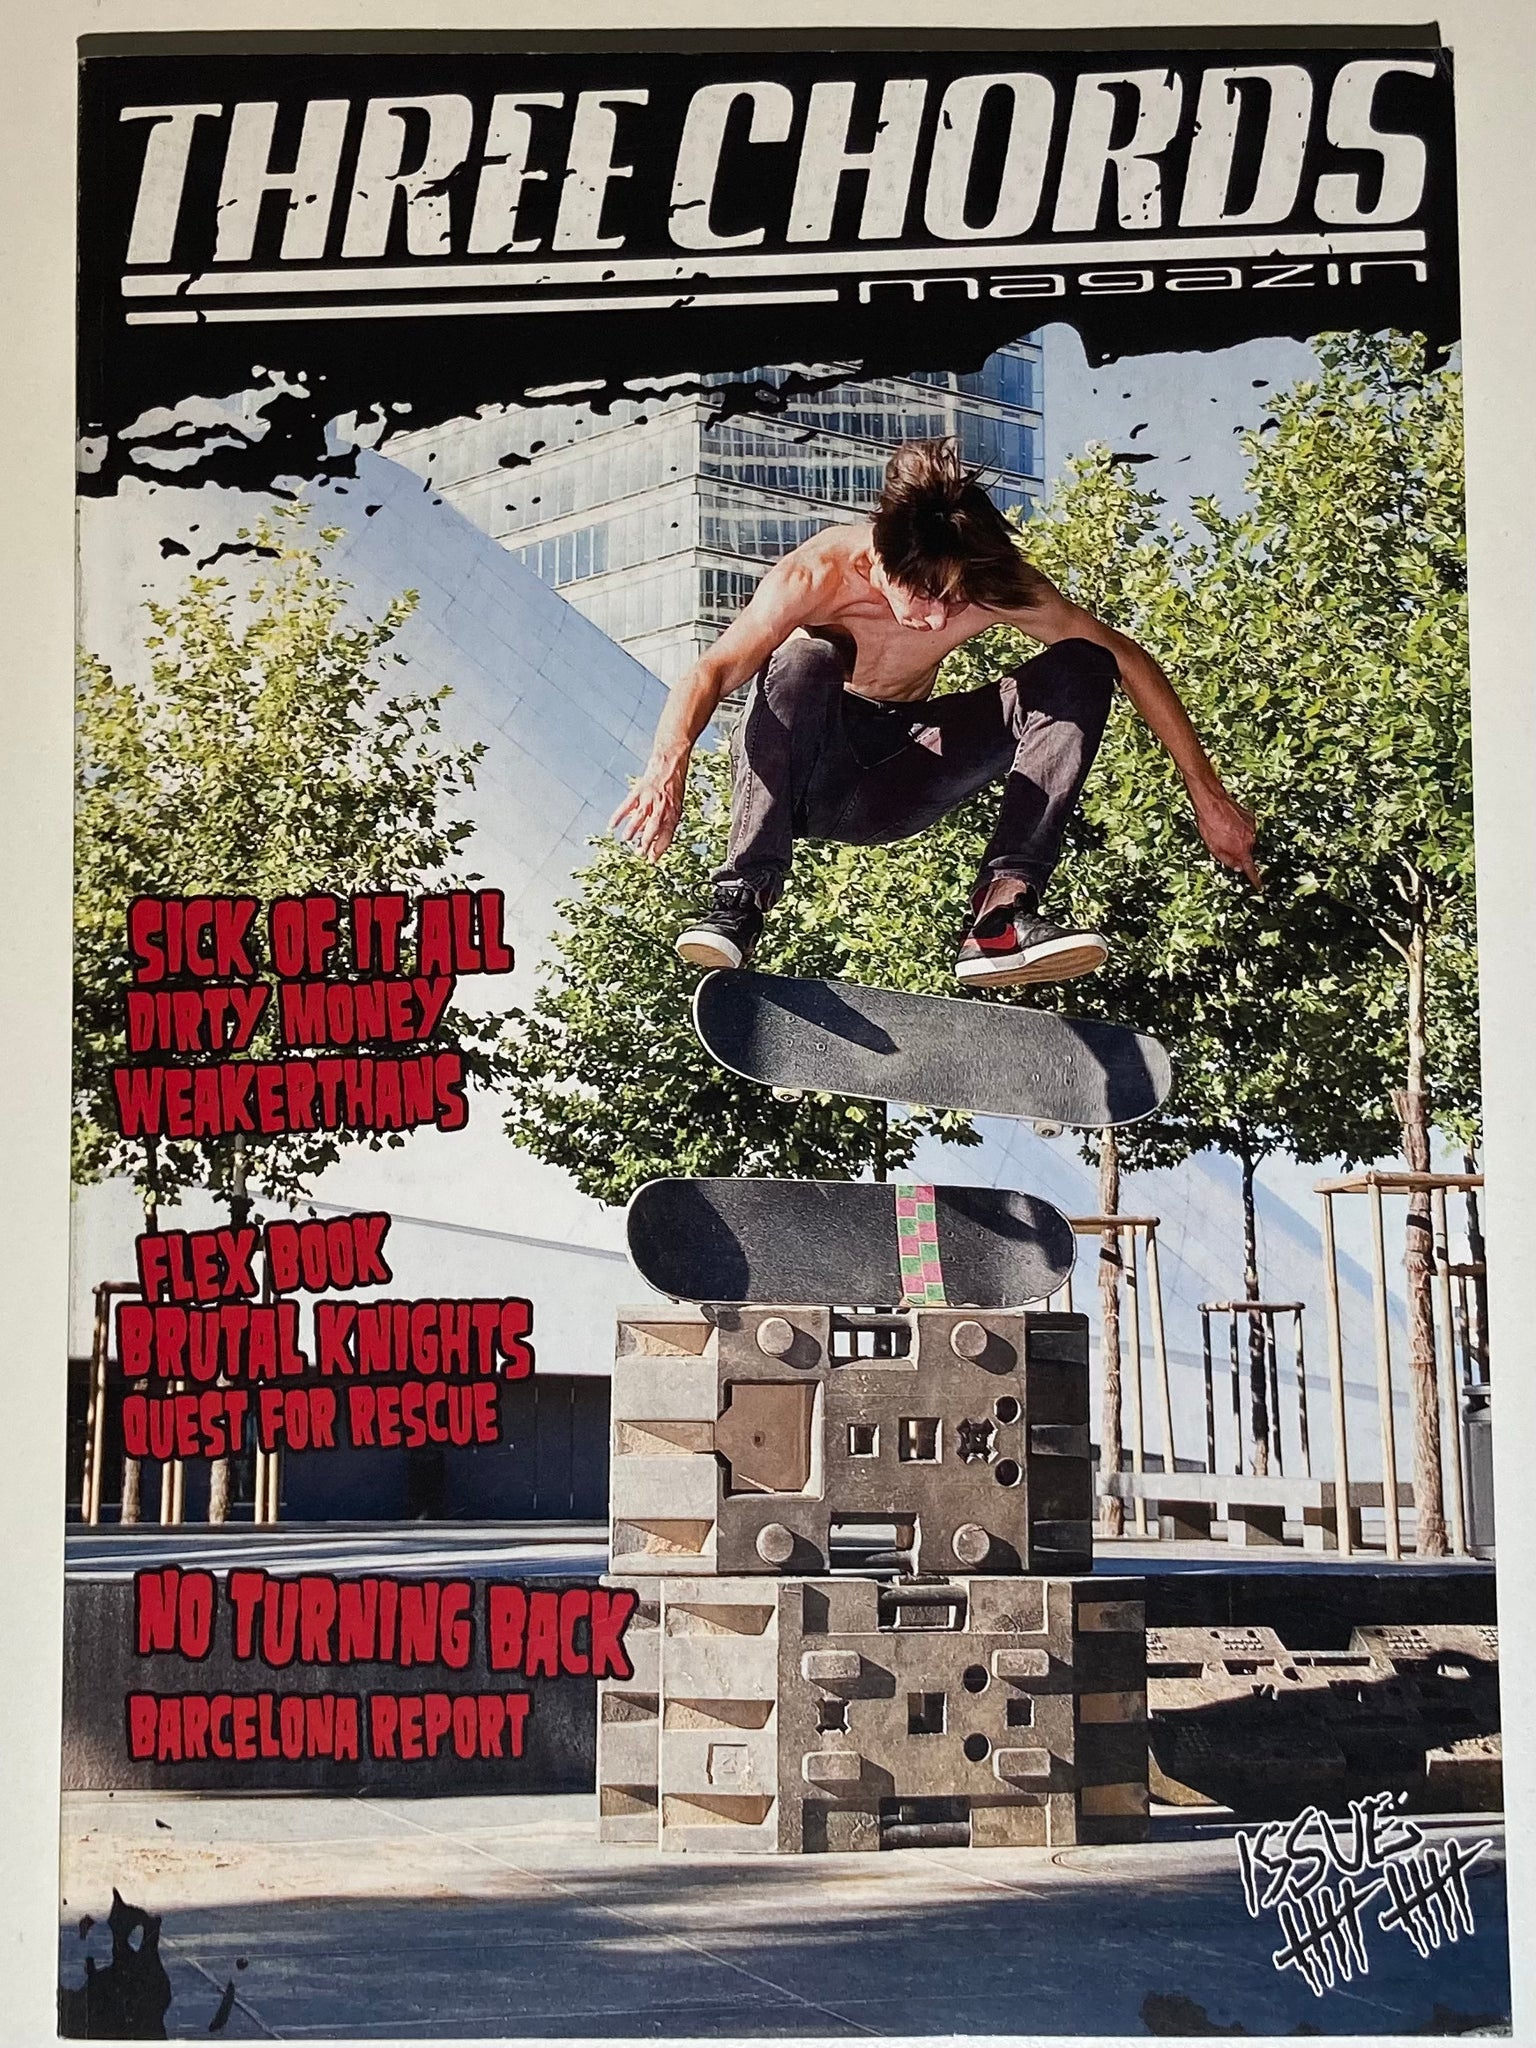 THREE CHORDS • Magazin • Punk/HC/Skate Fanzine